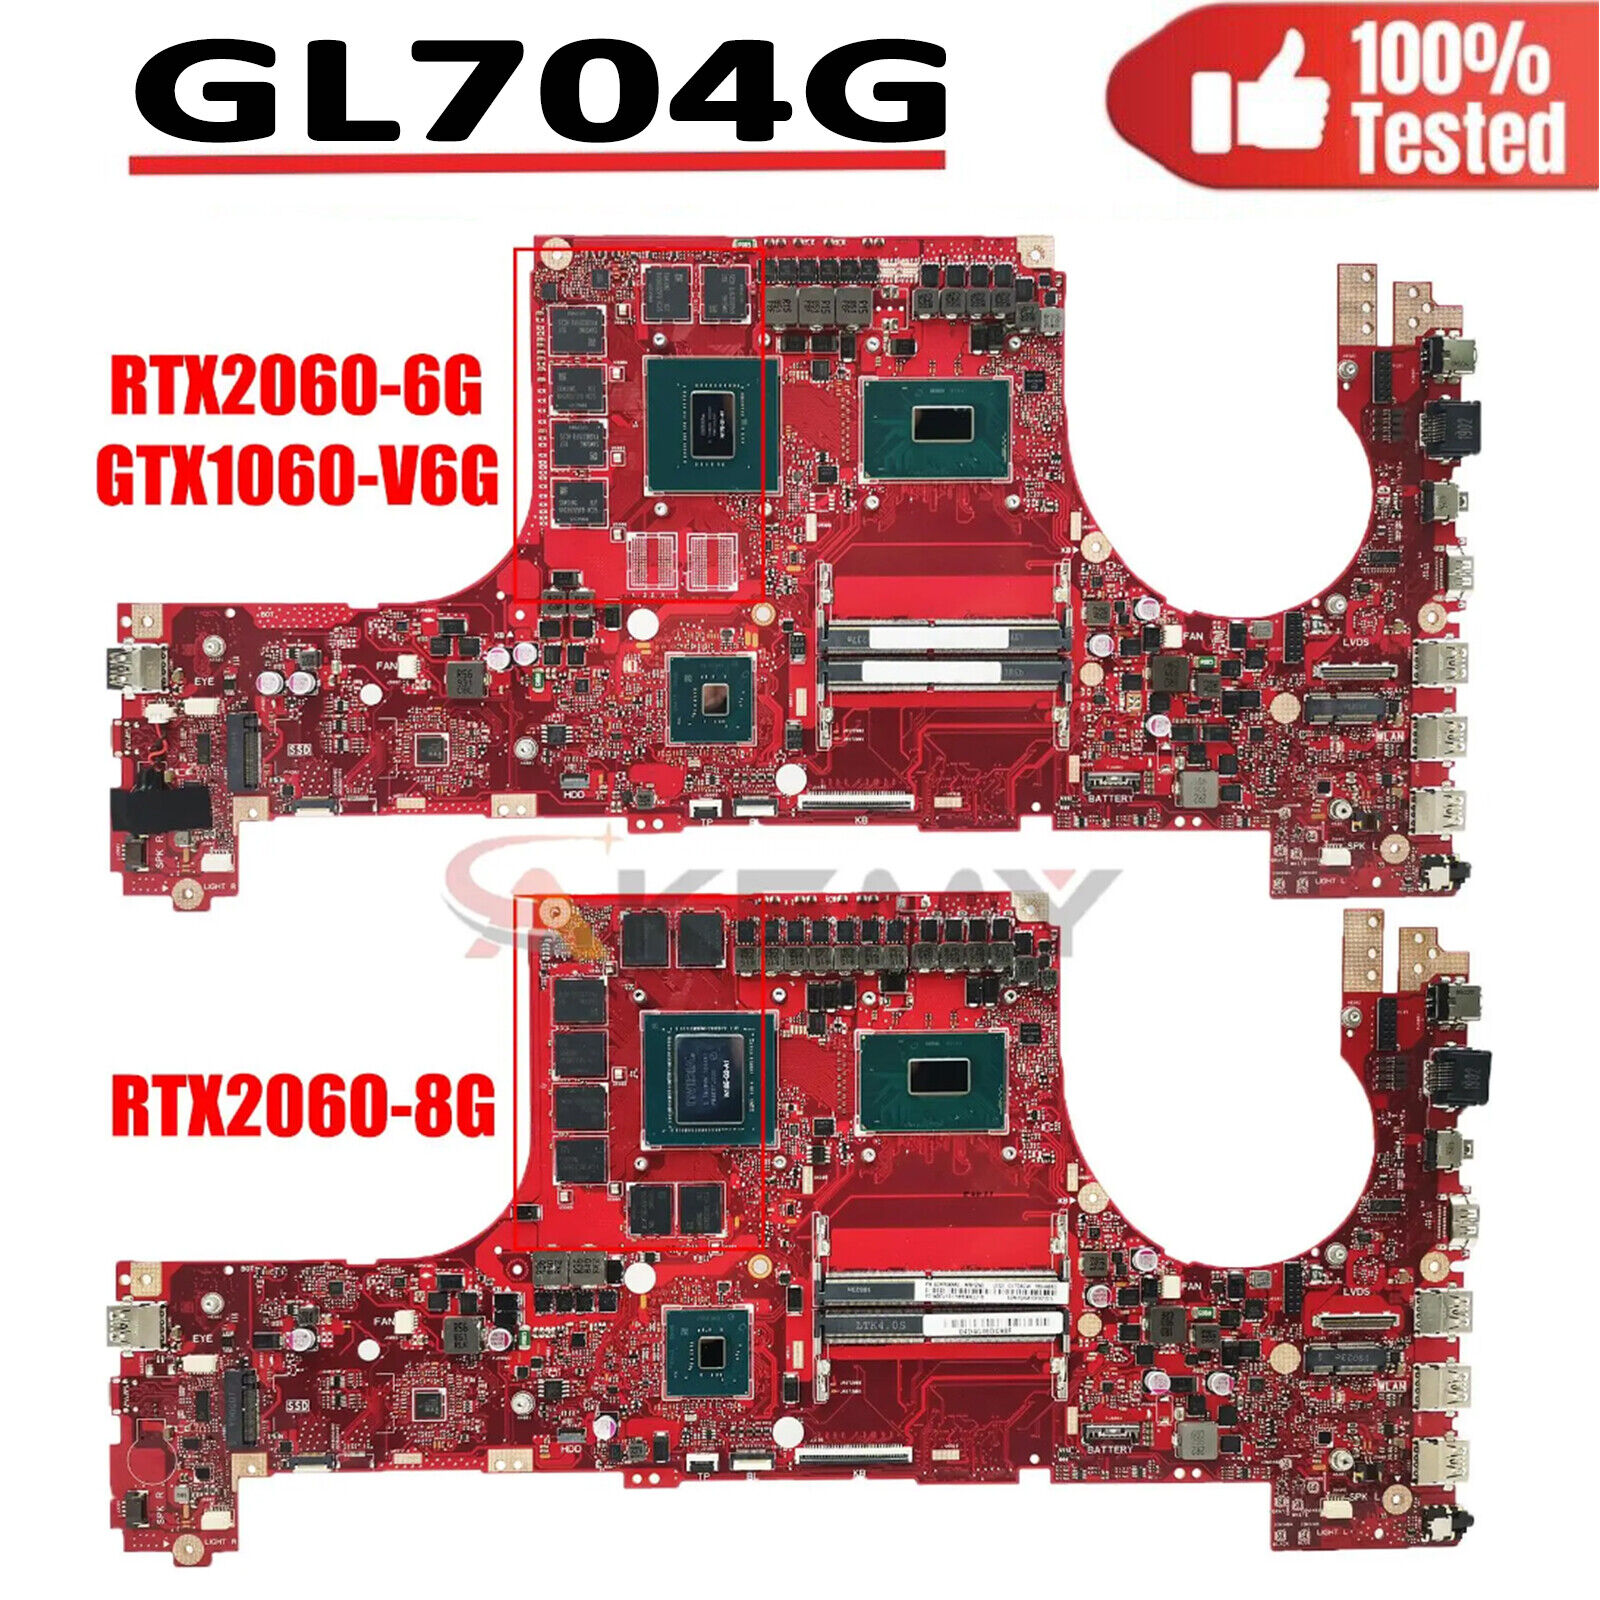 Gl704g Laptop Mainboard For Asus Rog Gl704gm Gl704gv Gl704gw I7-8570h Rtx2070